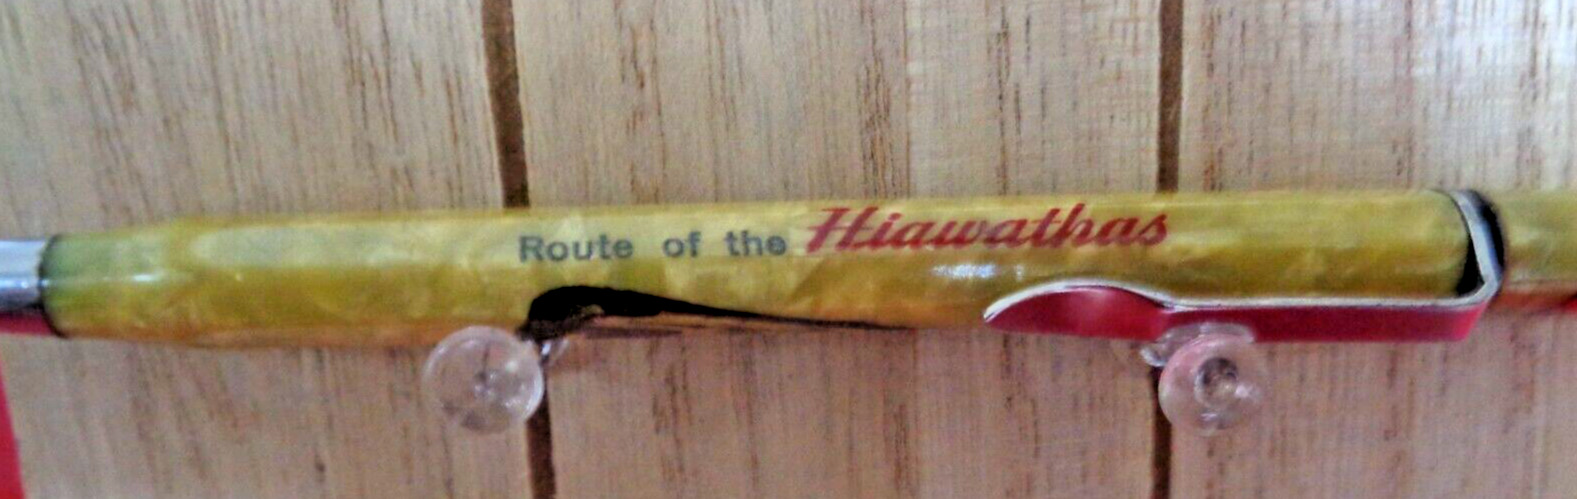 Vintage Mechanical Pencil - Route of the Hiawatha - Railroad